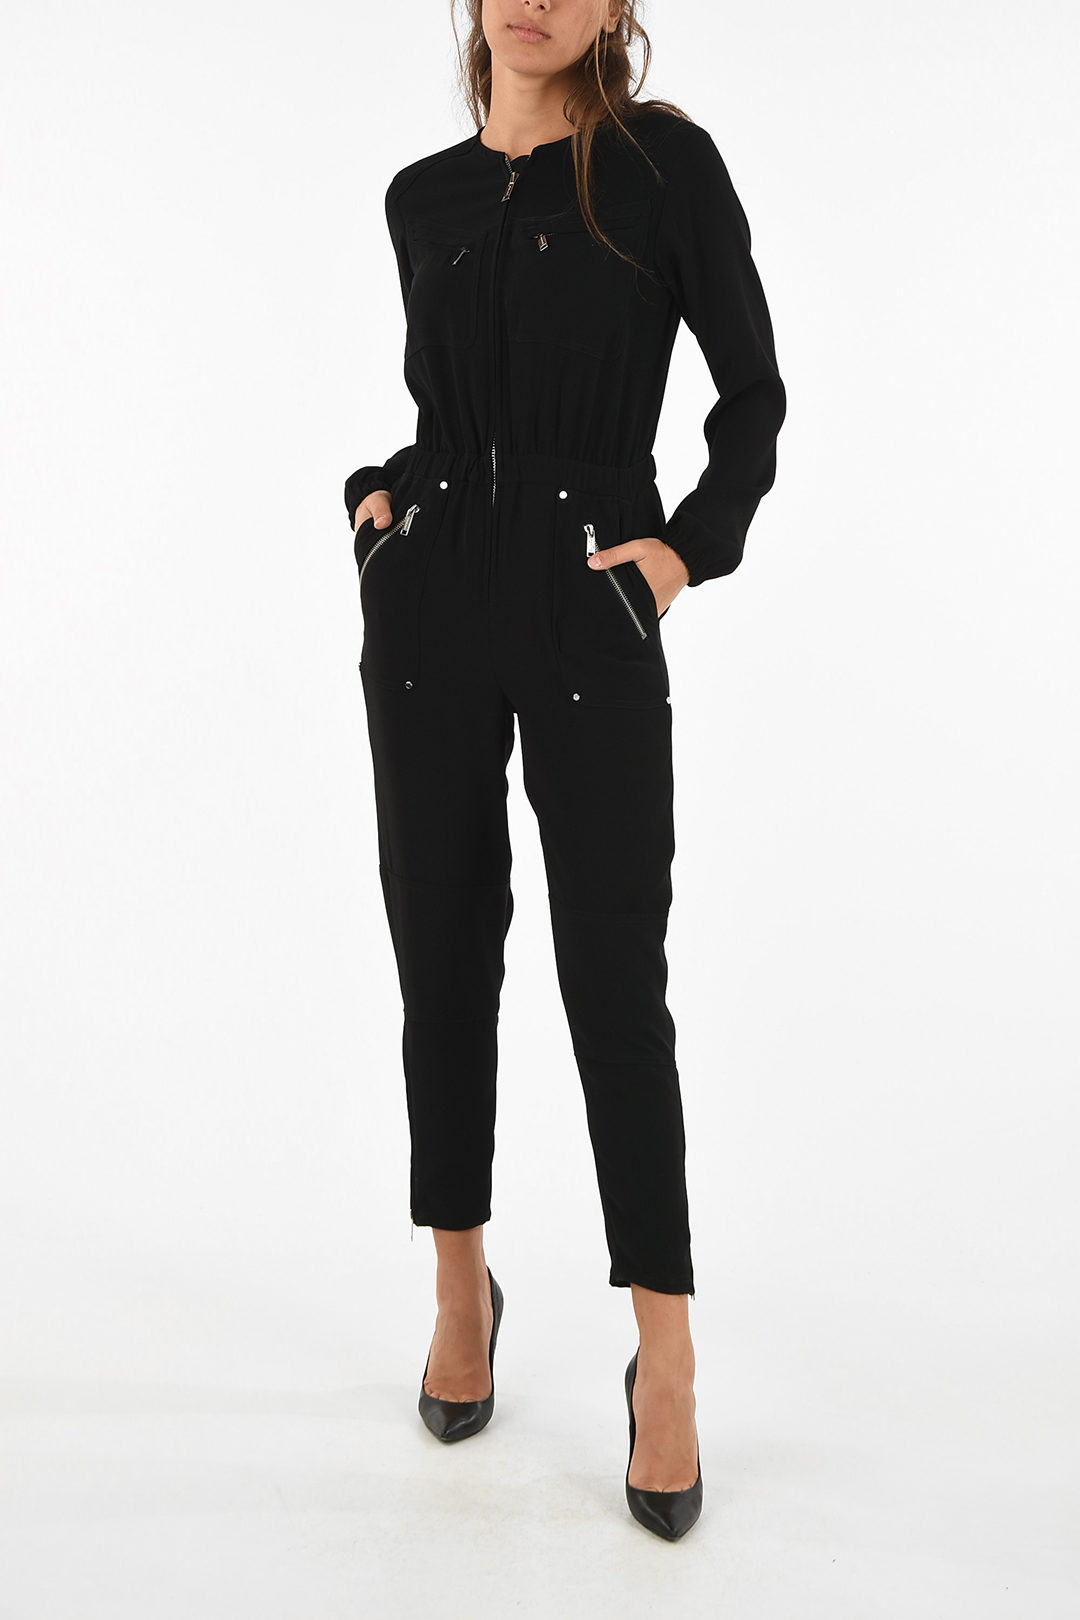 Michael Kors MICHAEL Full zip jumpsuit women - Glamood Outlet